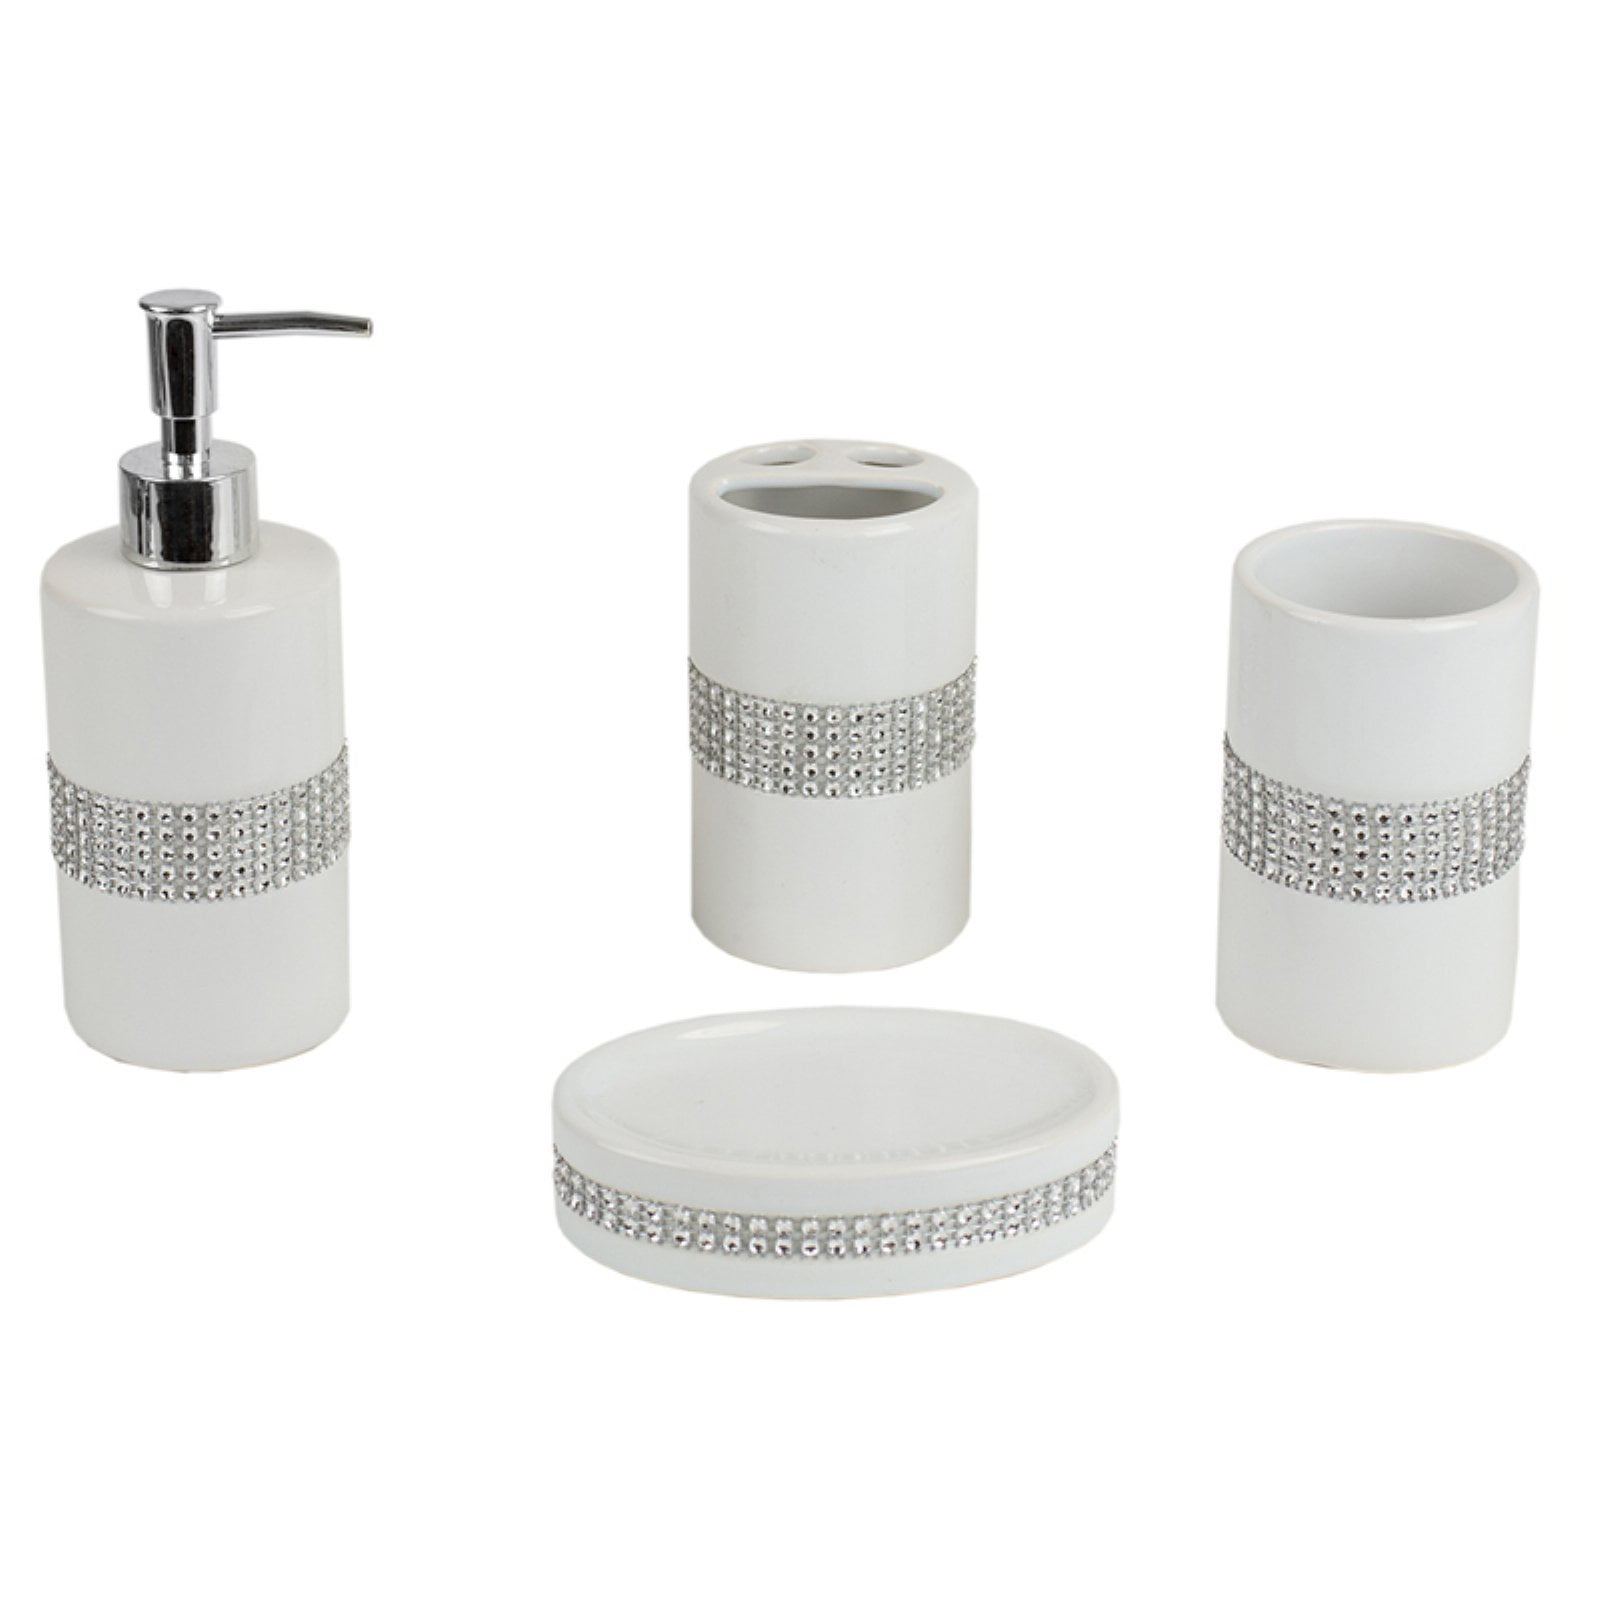 Bathroom Accessories Set, Deluxe White & Beige Ceramic Bath Accessory Set